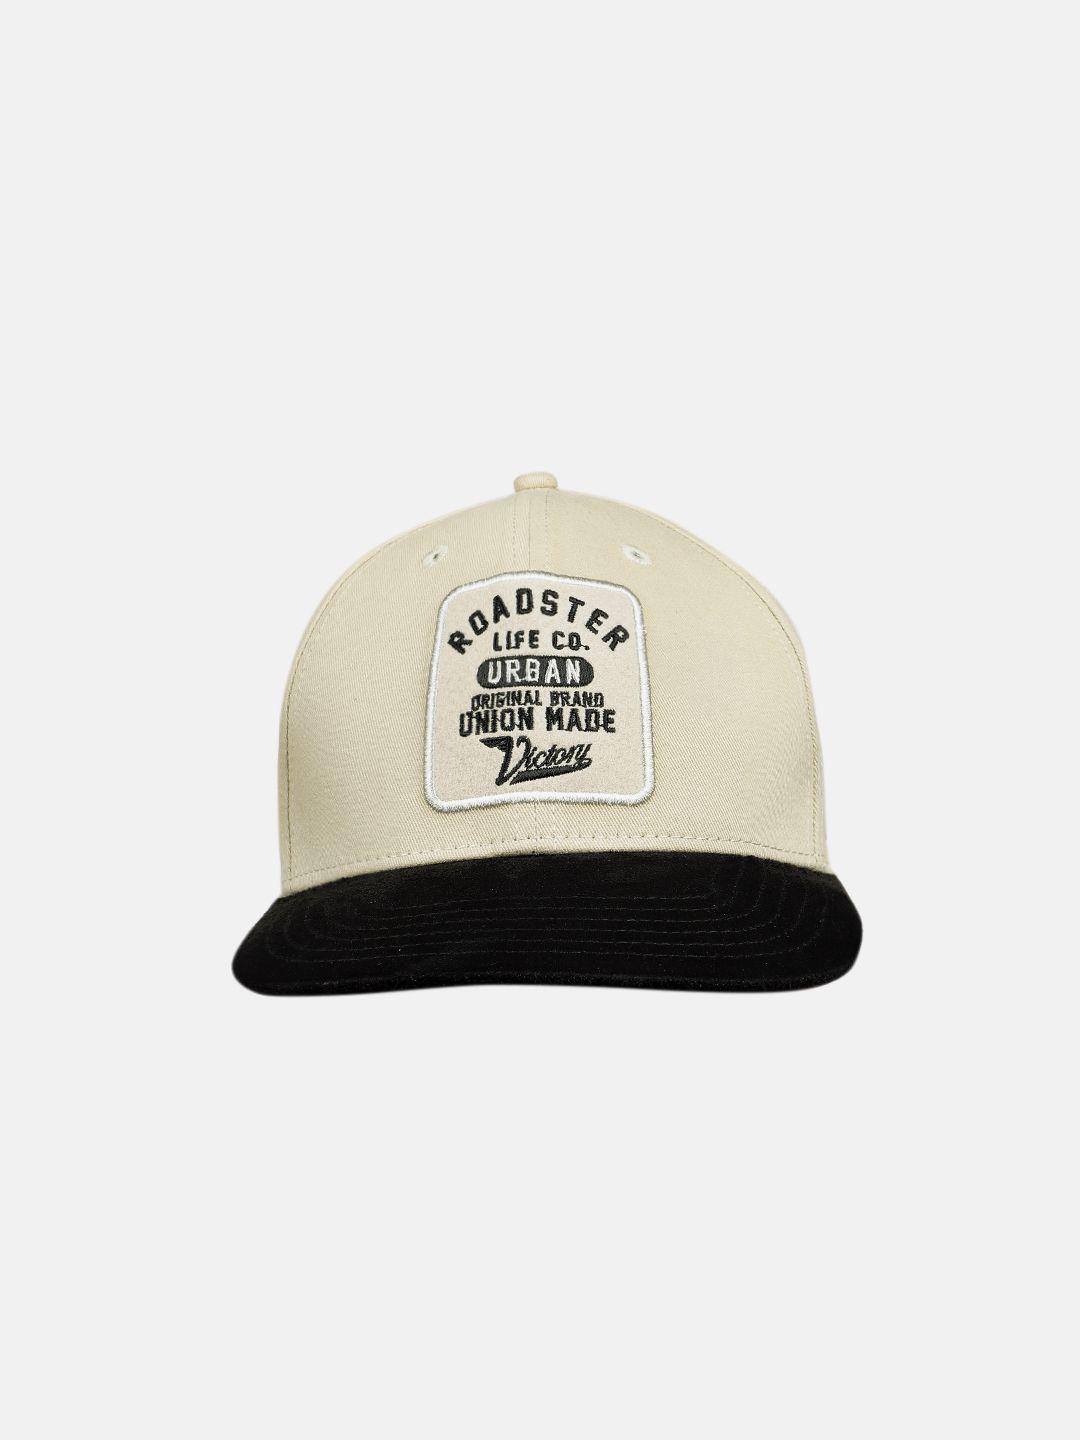 roadster unisex beige & black embroidered snapback cap